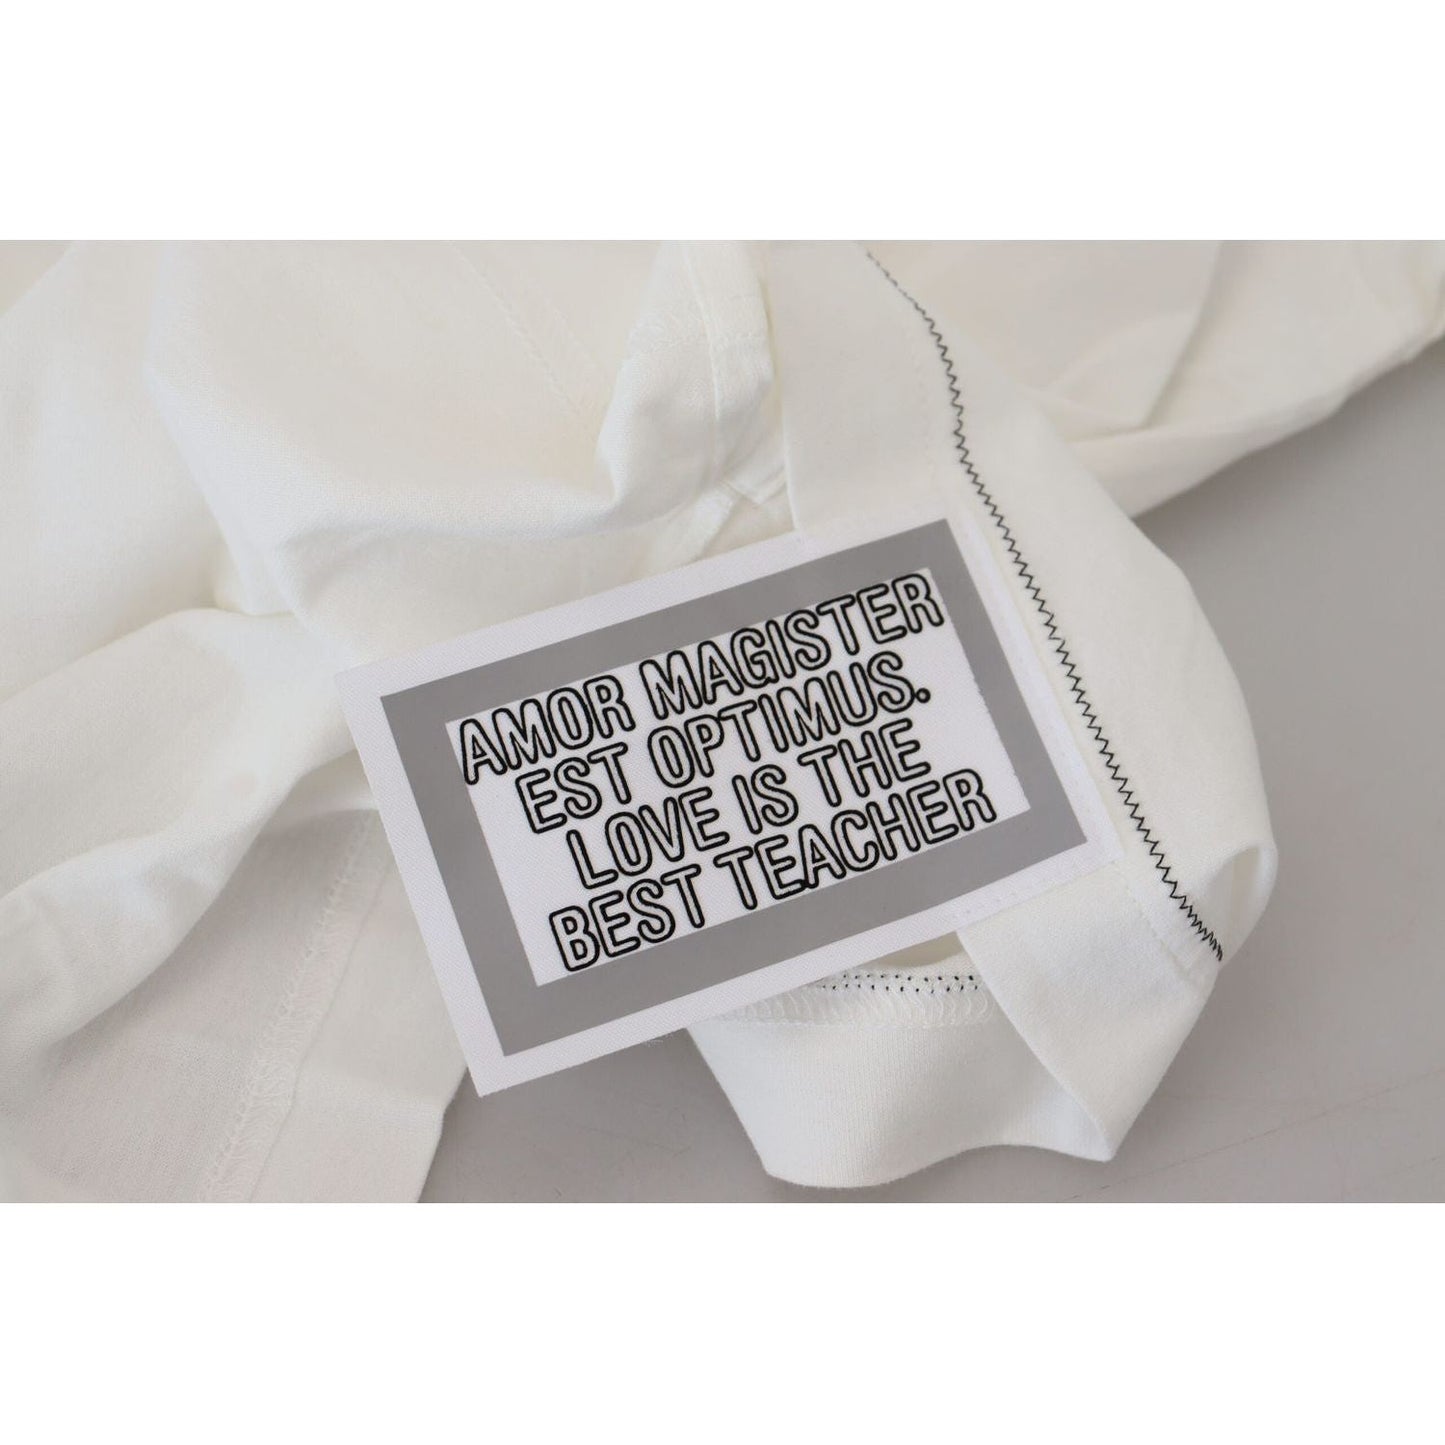 Dolce & Gabbana Elegant Crew Neck Cotton Tee white-printed-short-sleeves-mens-t-shirt IMG_1953-scaled-e9847c8a-b52.jpg